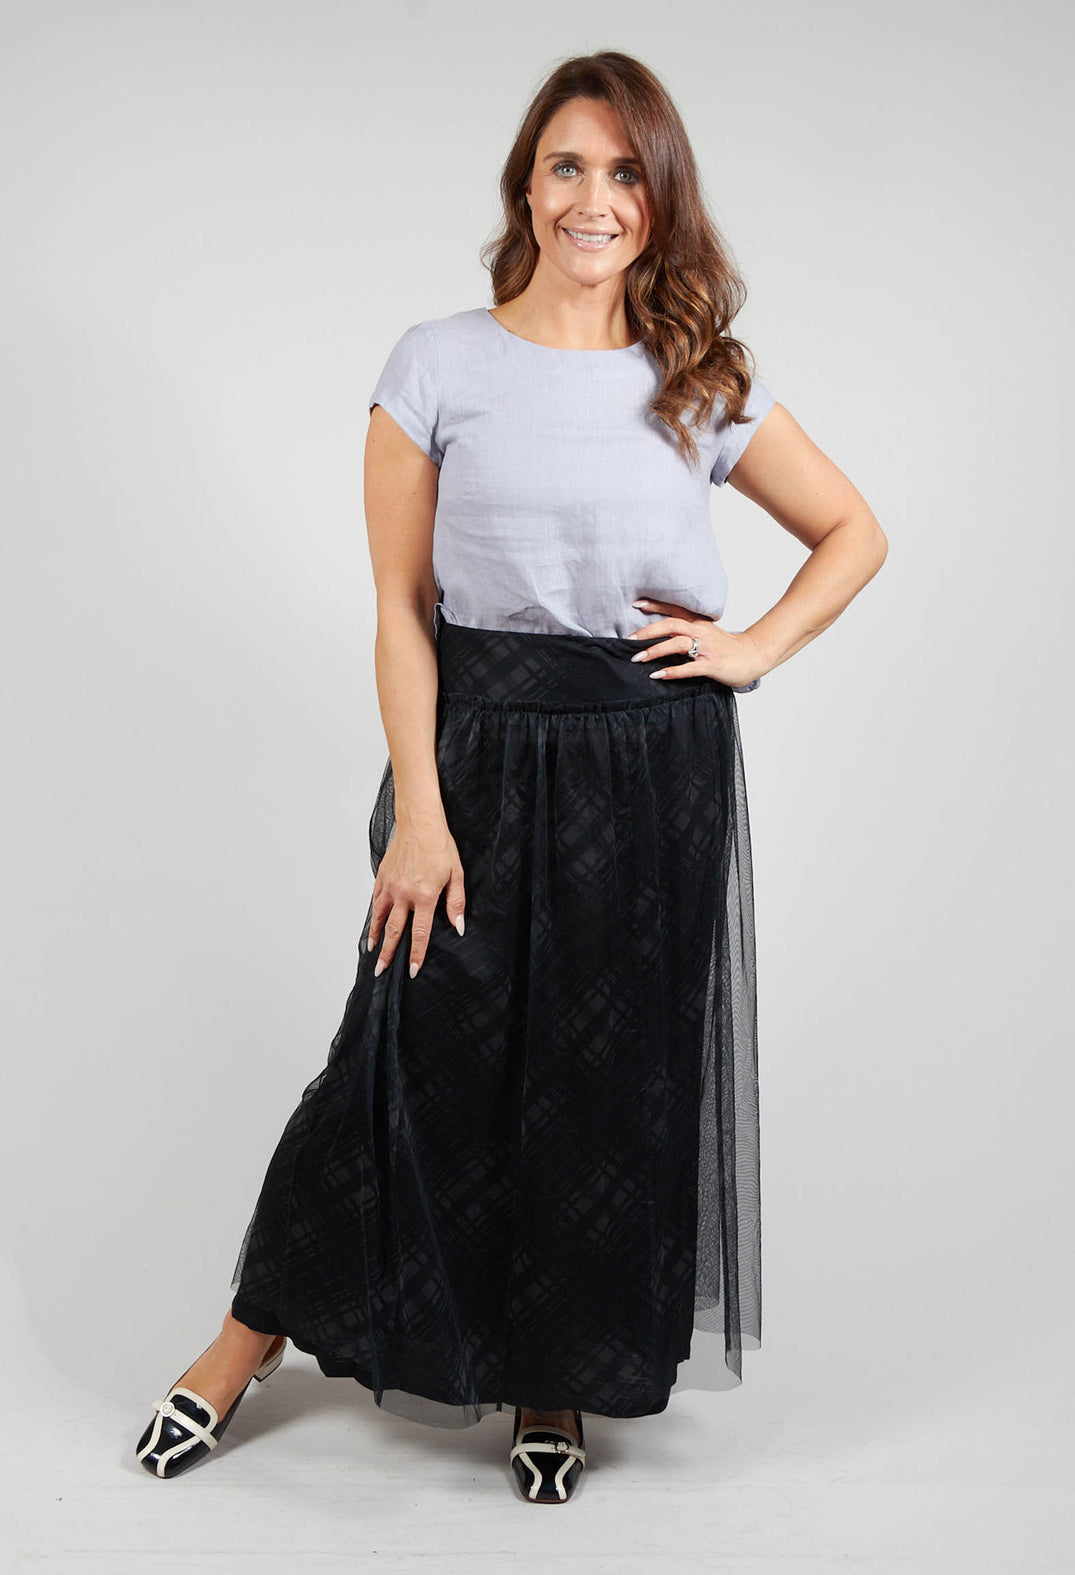 Fine Jersey Skirt with Net Overlay in inox